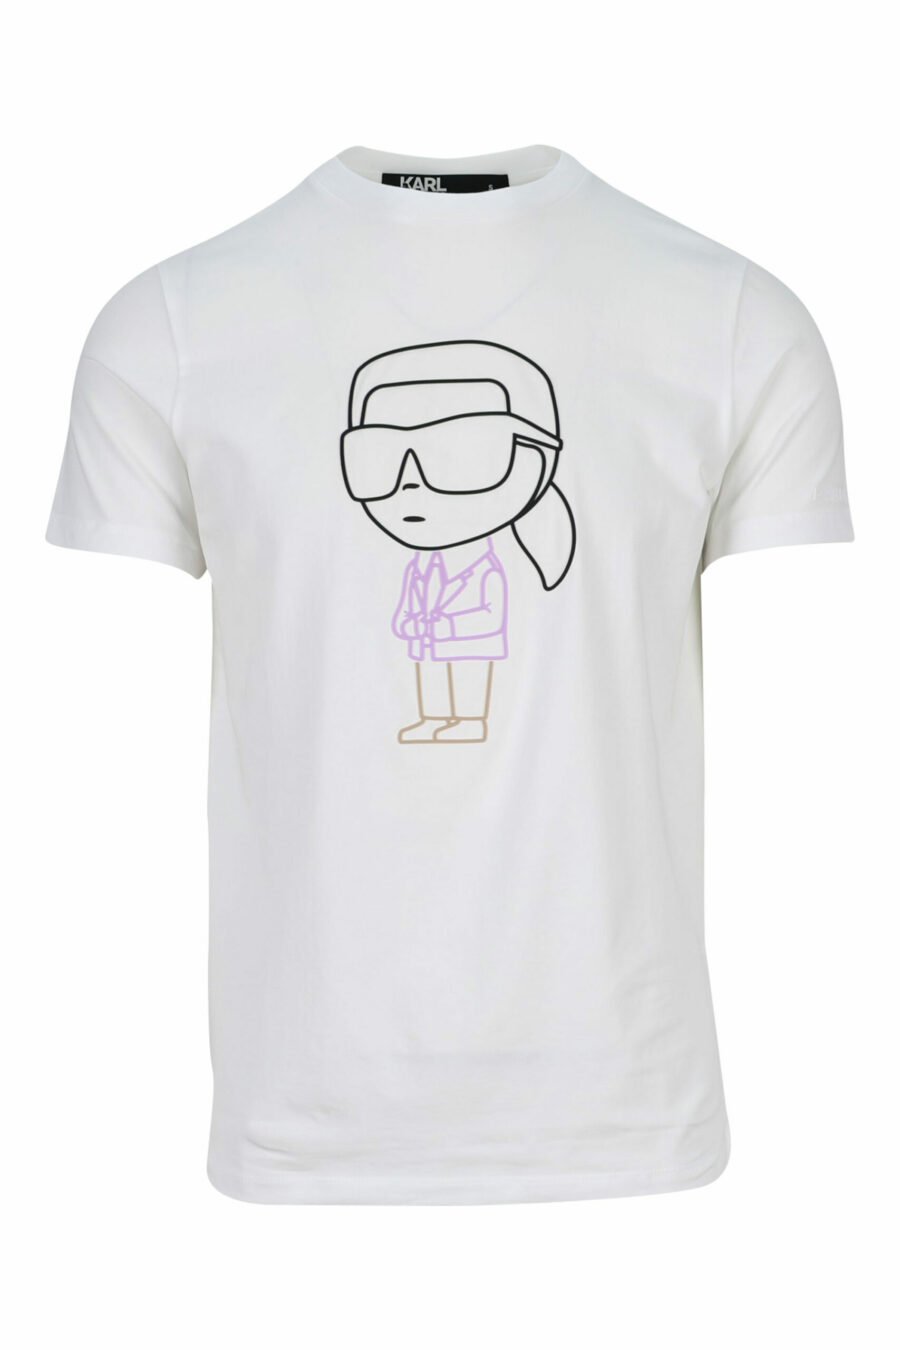 T-shirt blanc avec maxilogo multicolore "karl silhouette" - 4062226400701 1 scaled